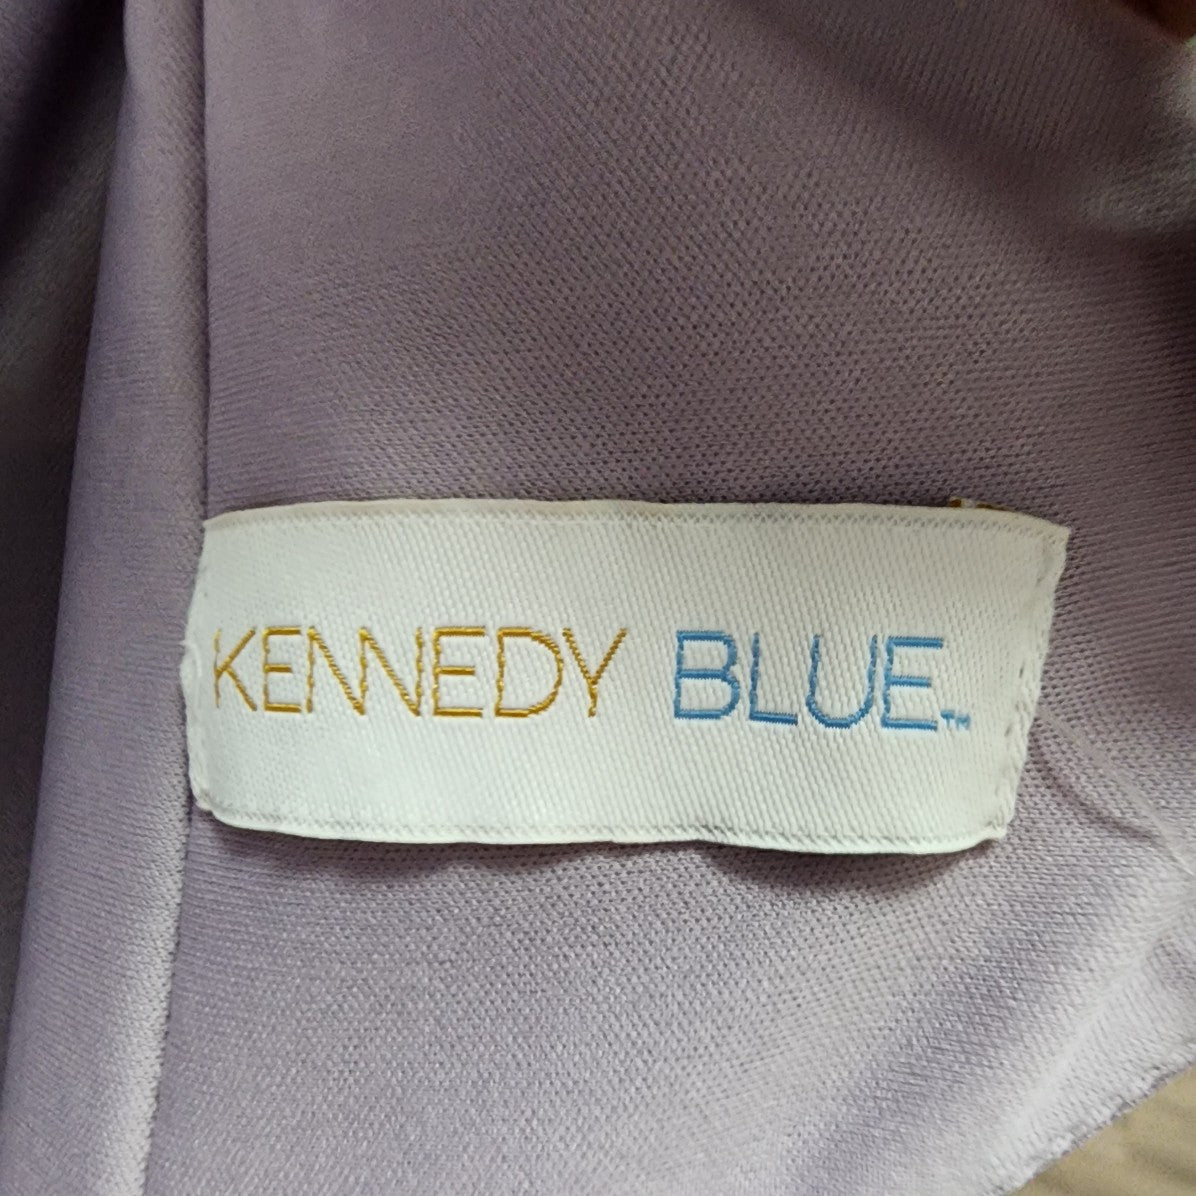 Kennedy Grey Purple Front Slit Bridesmaid Event Dress Size 10